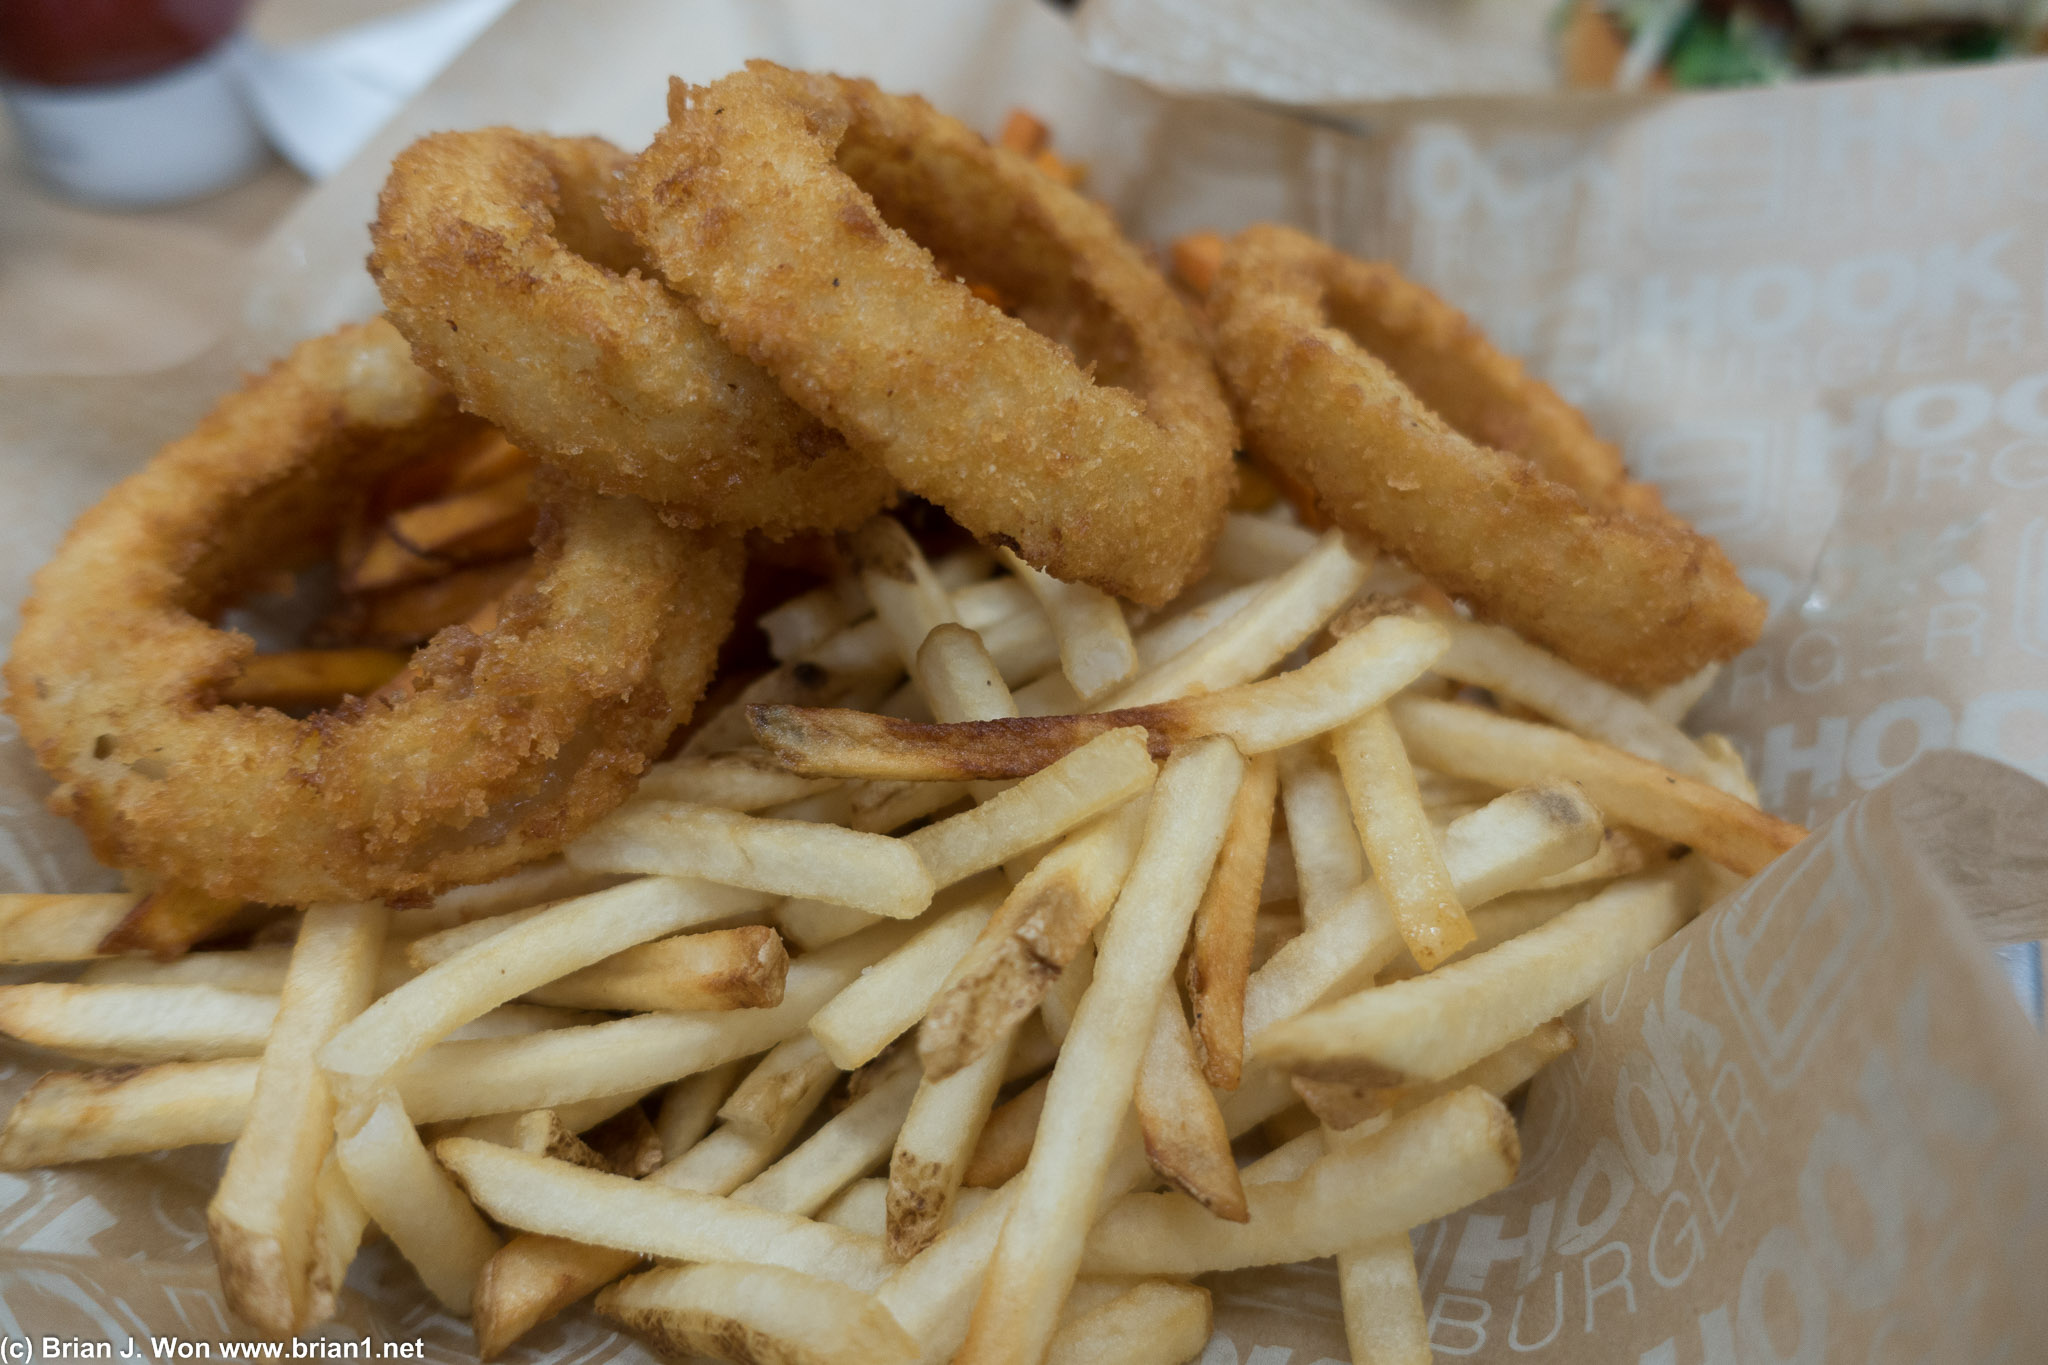 Sampler-- onion rings, sweet potato fries, regular fries. Pretty decent.